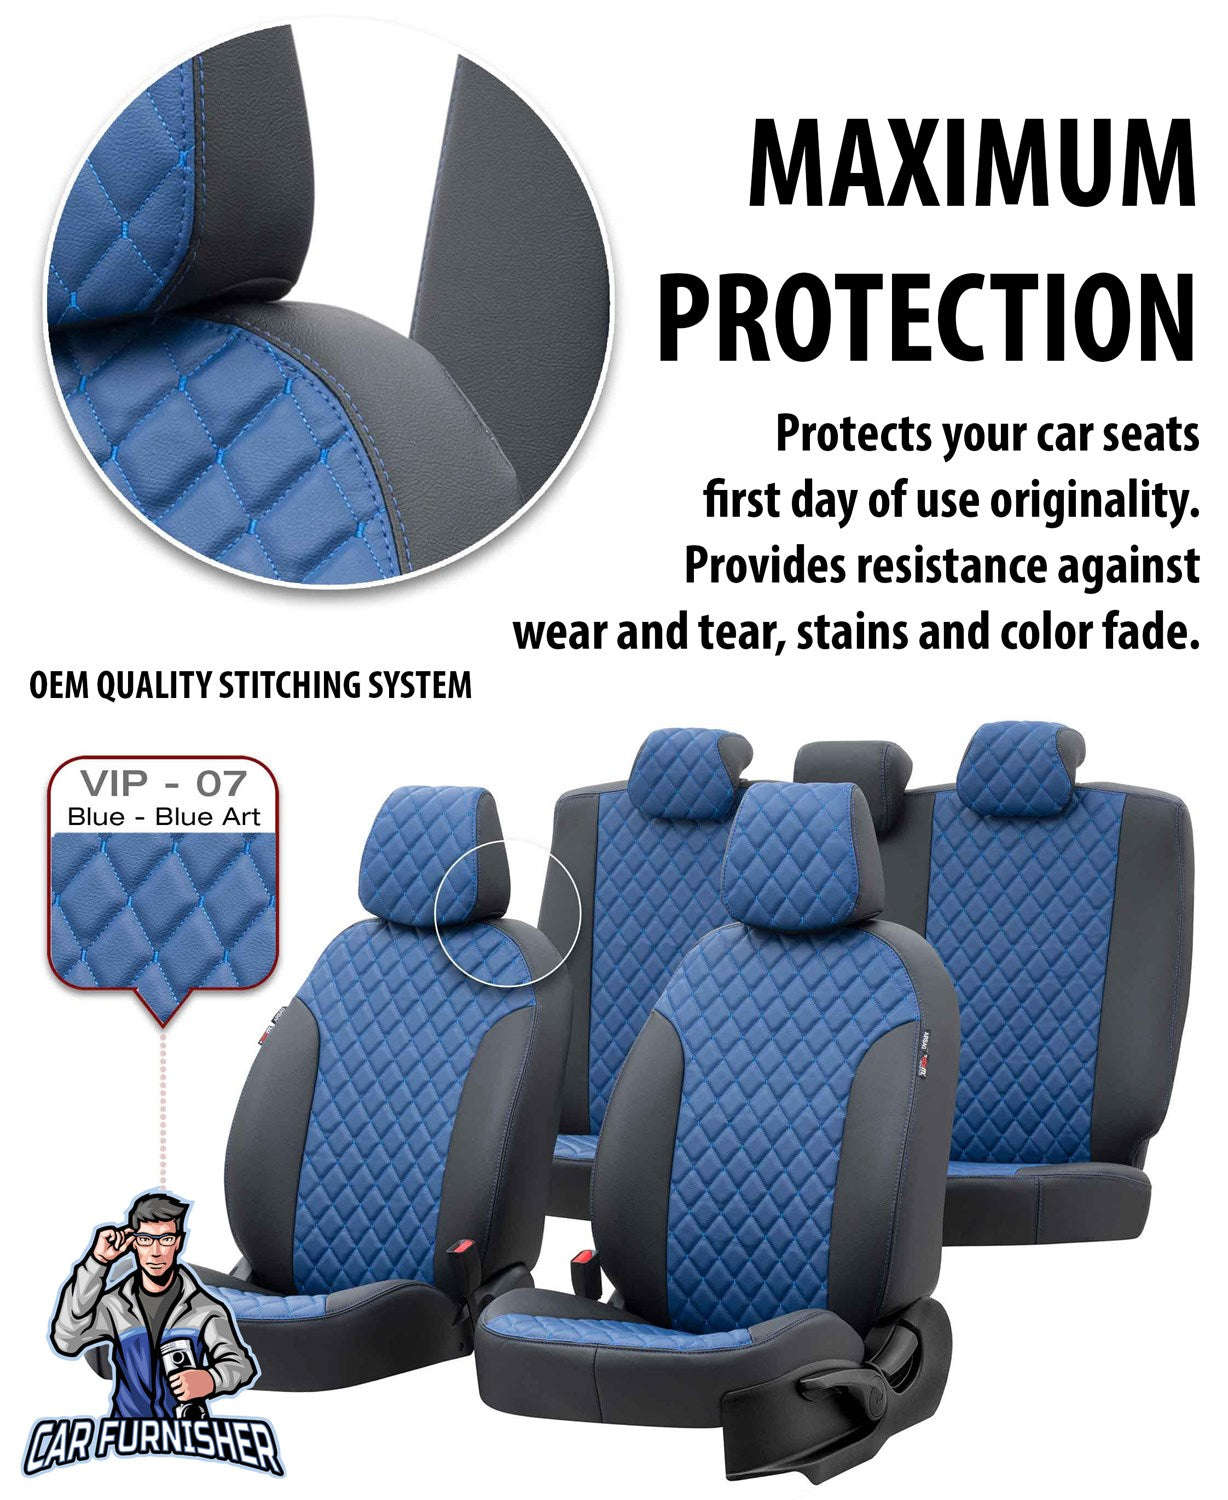 Seat Toledo Car Seat Covers 1999-2017 Madrid Design Beige Full Set (5 Seats + Handrest) Full Leather